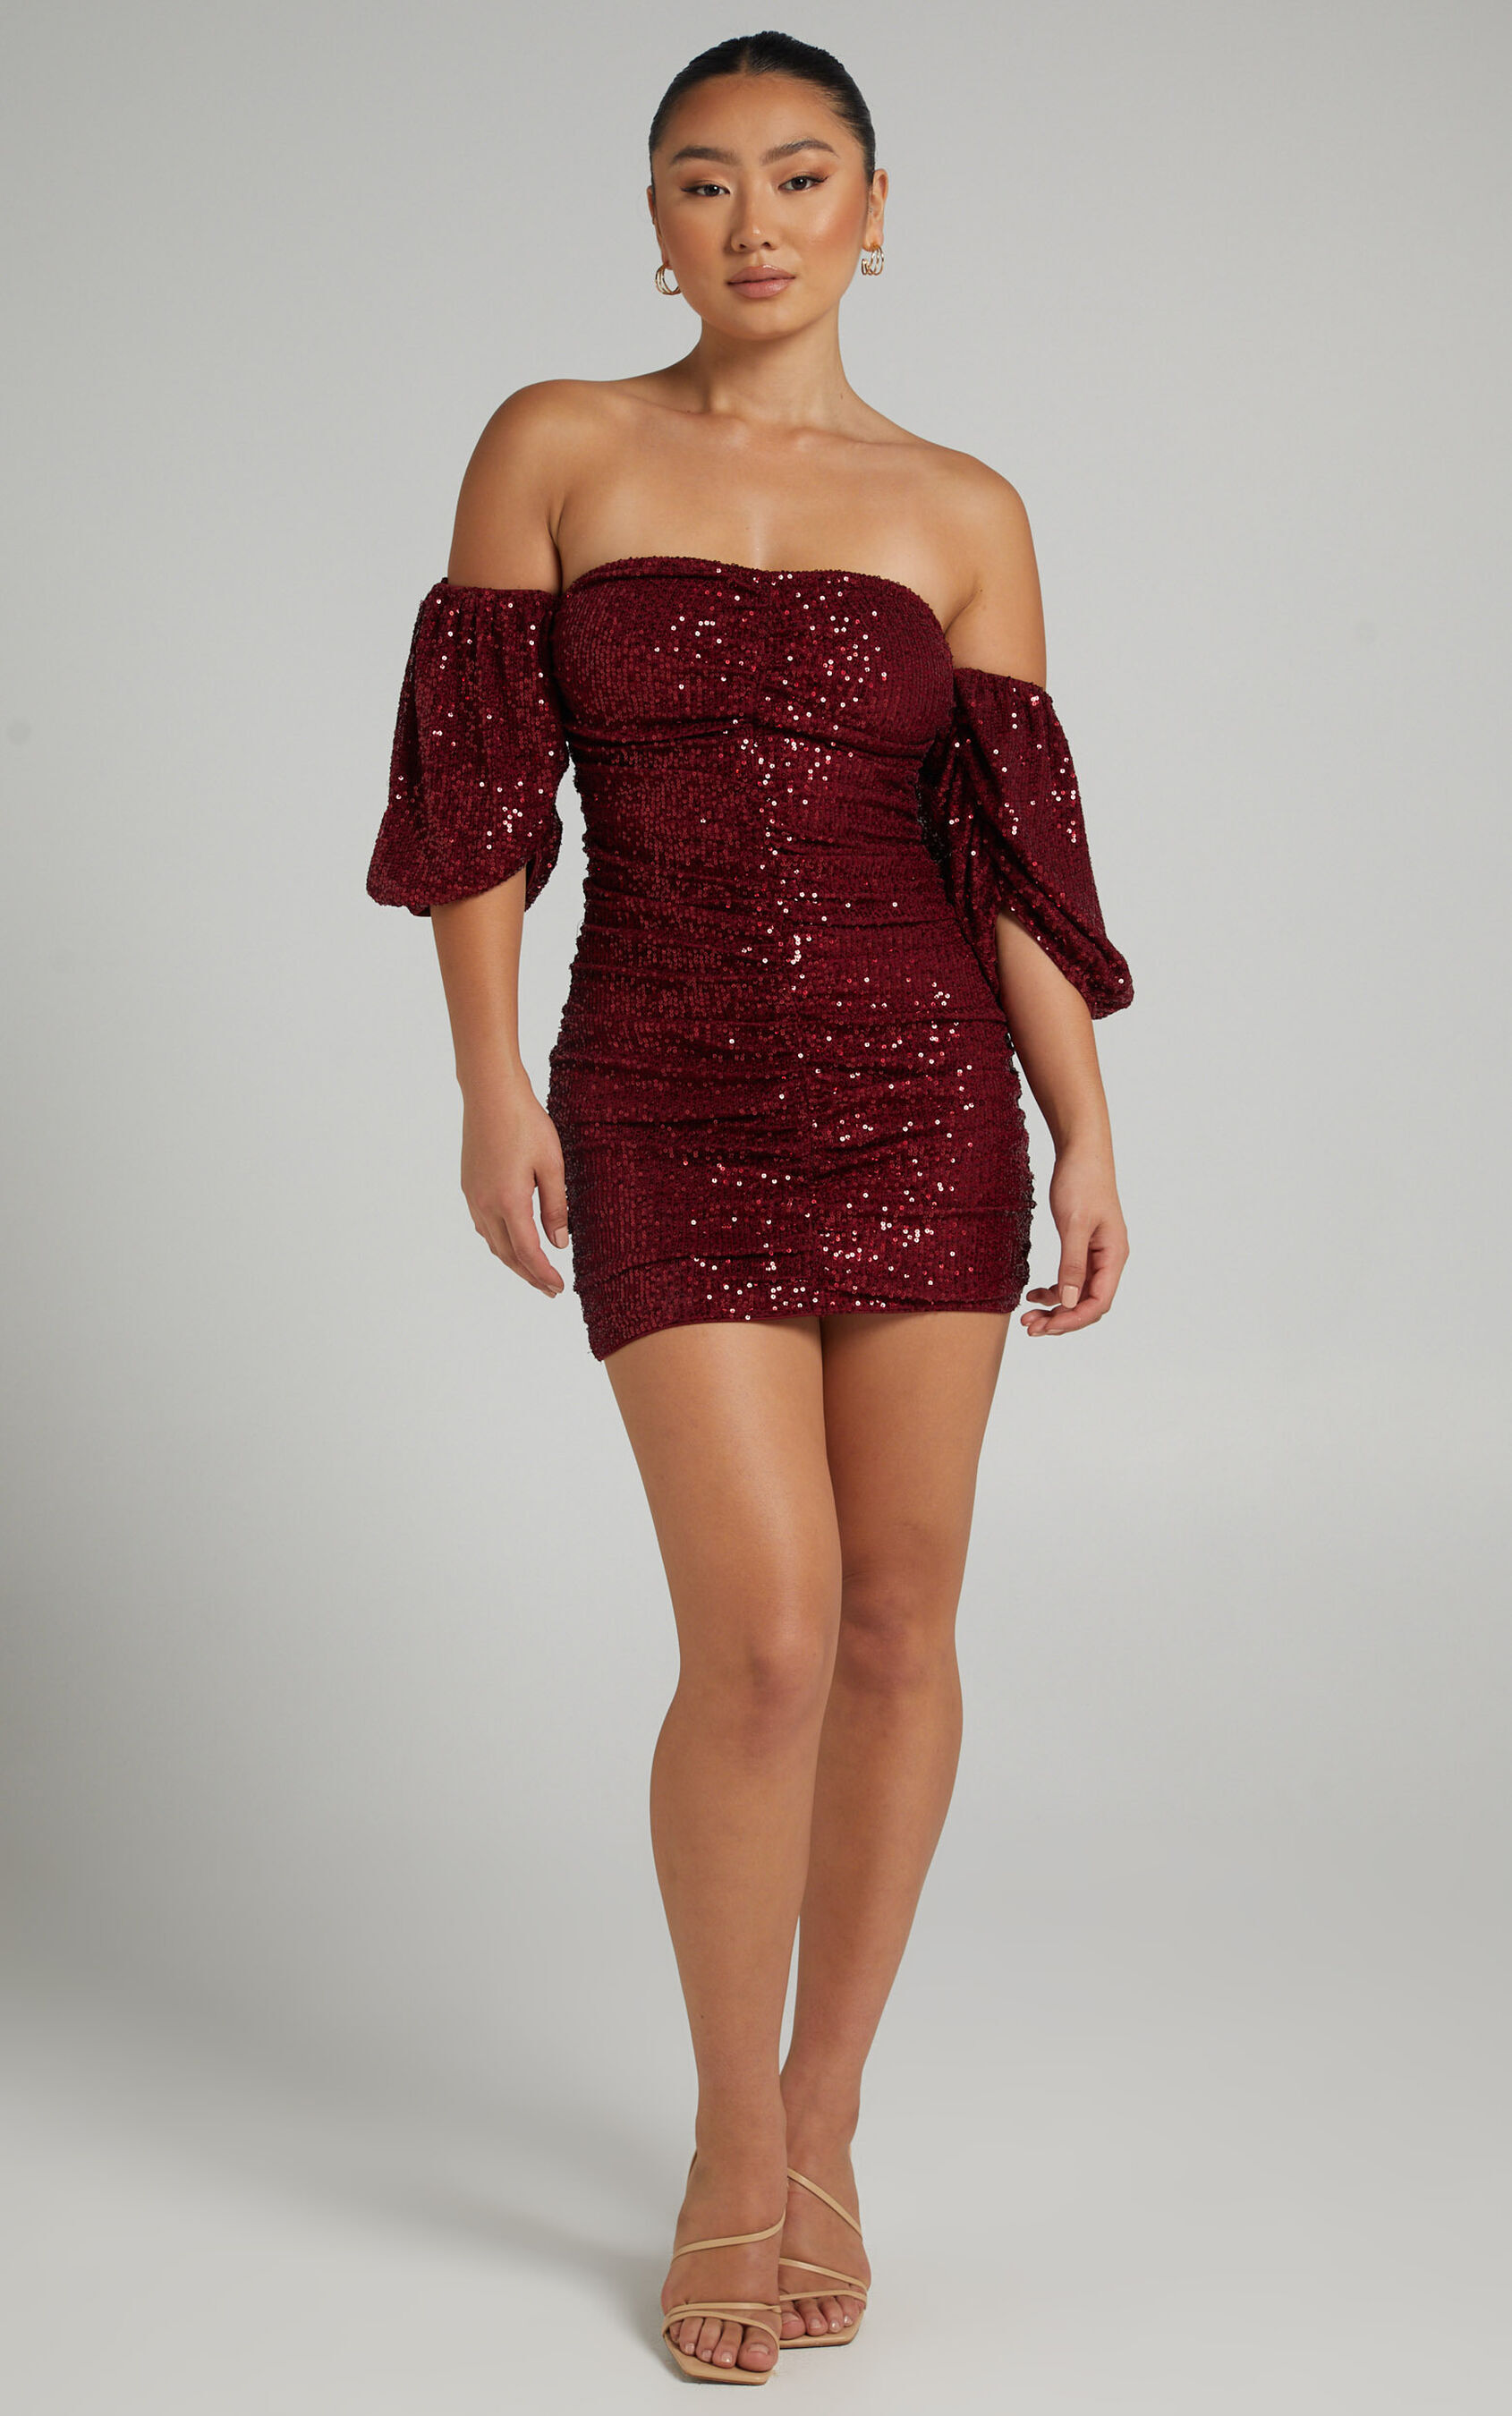 shaneal-off-shoulder-mini-dress-in-wine-sequin